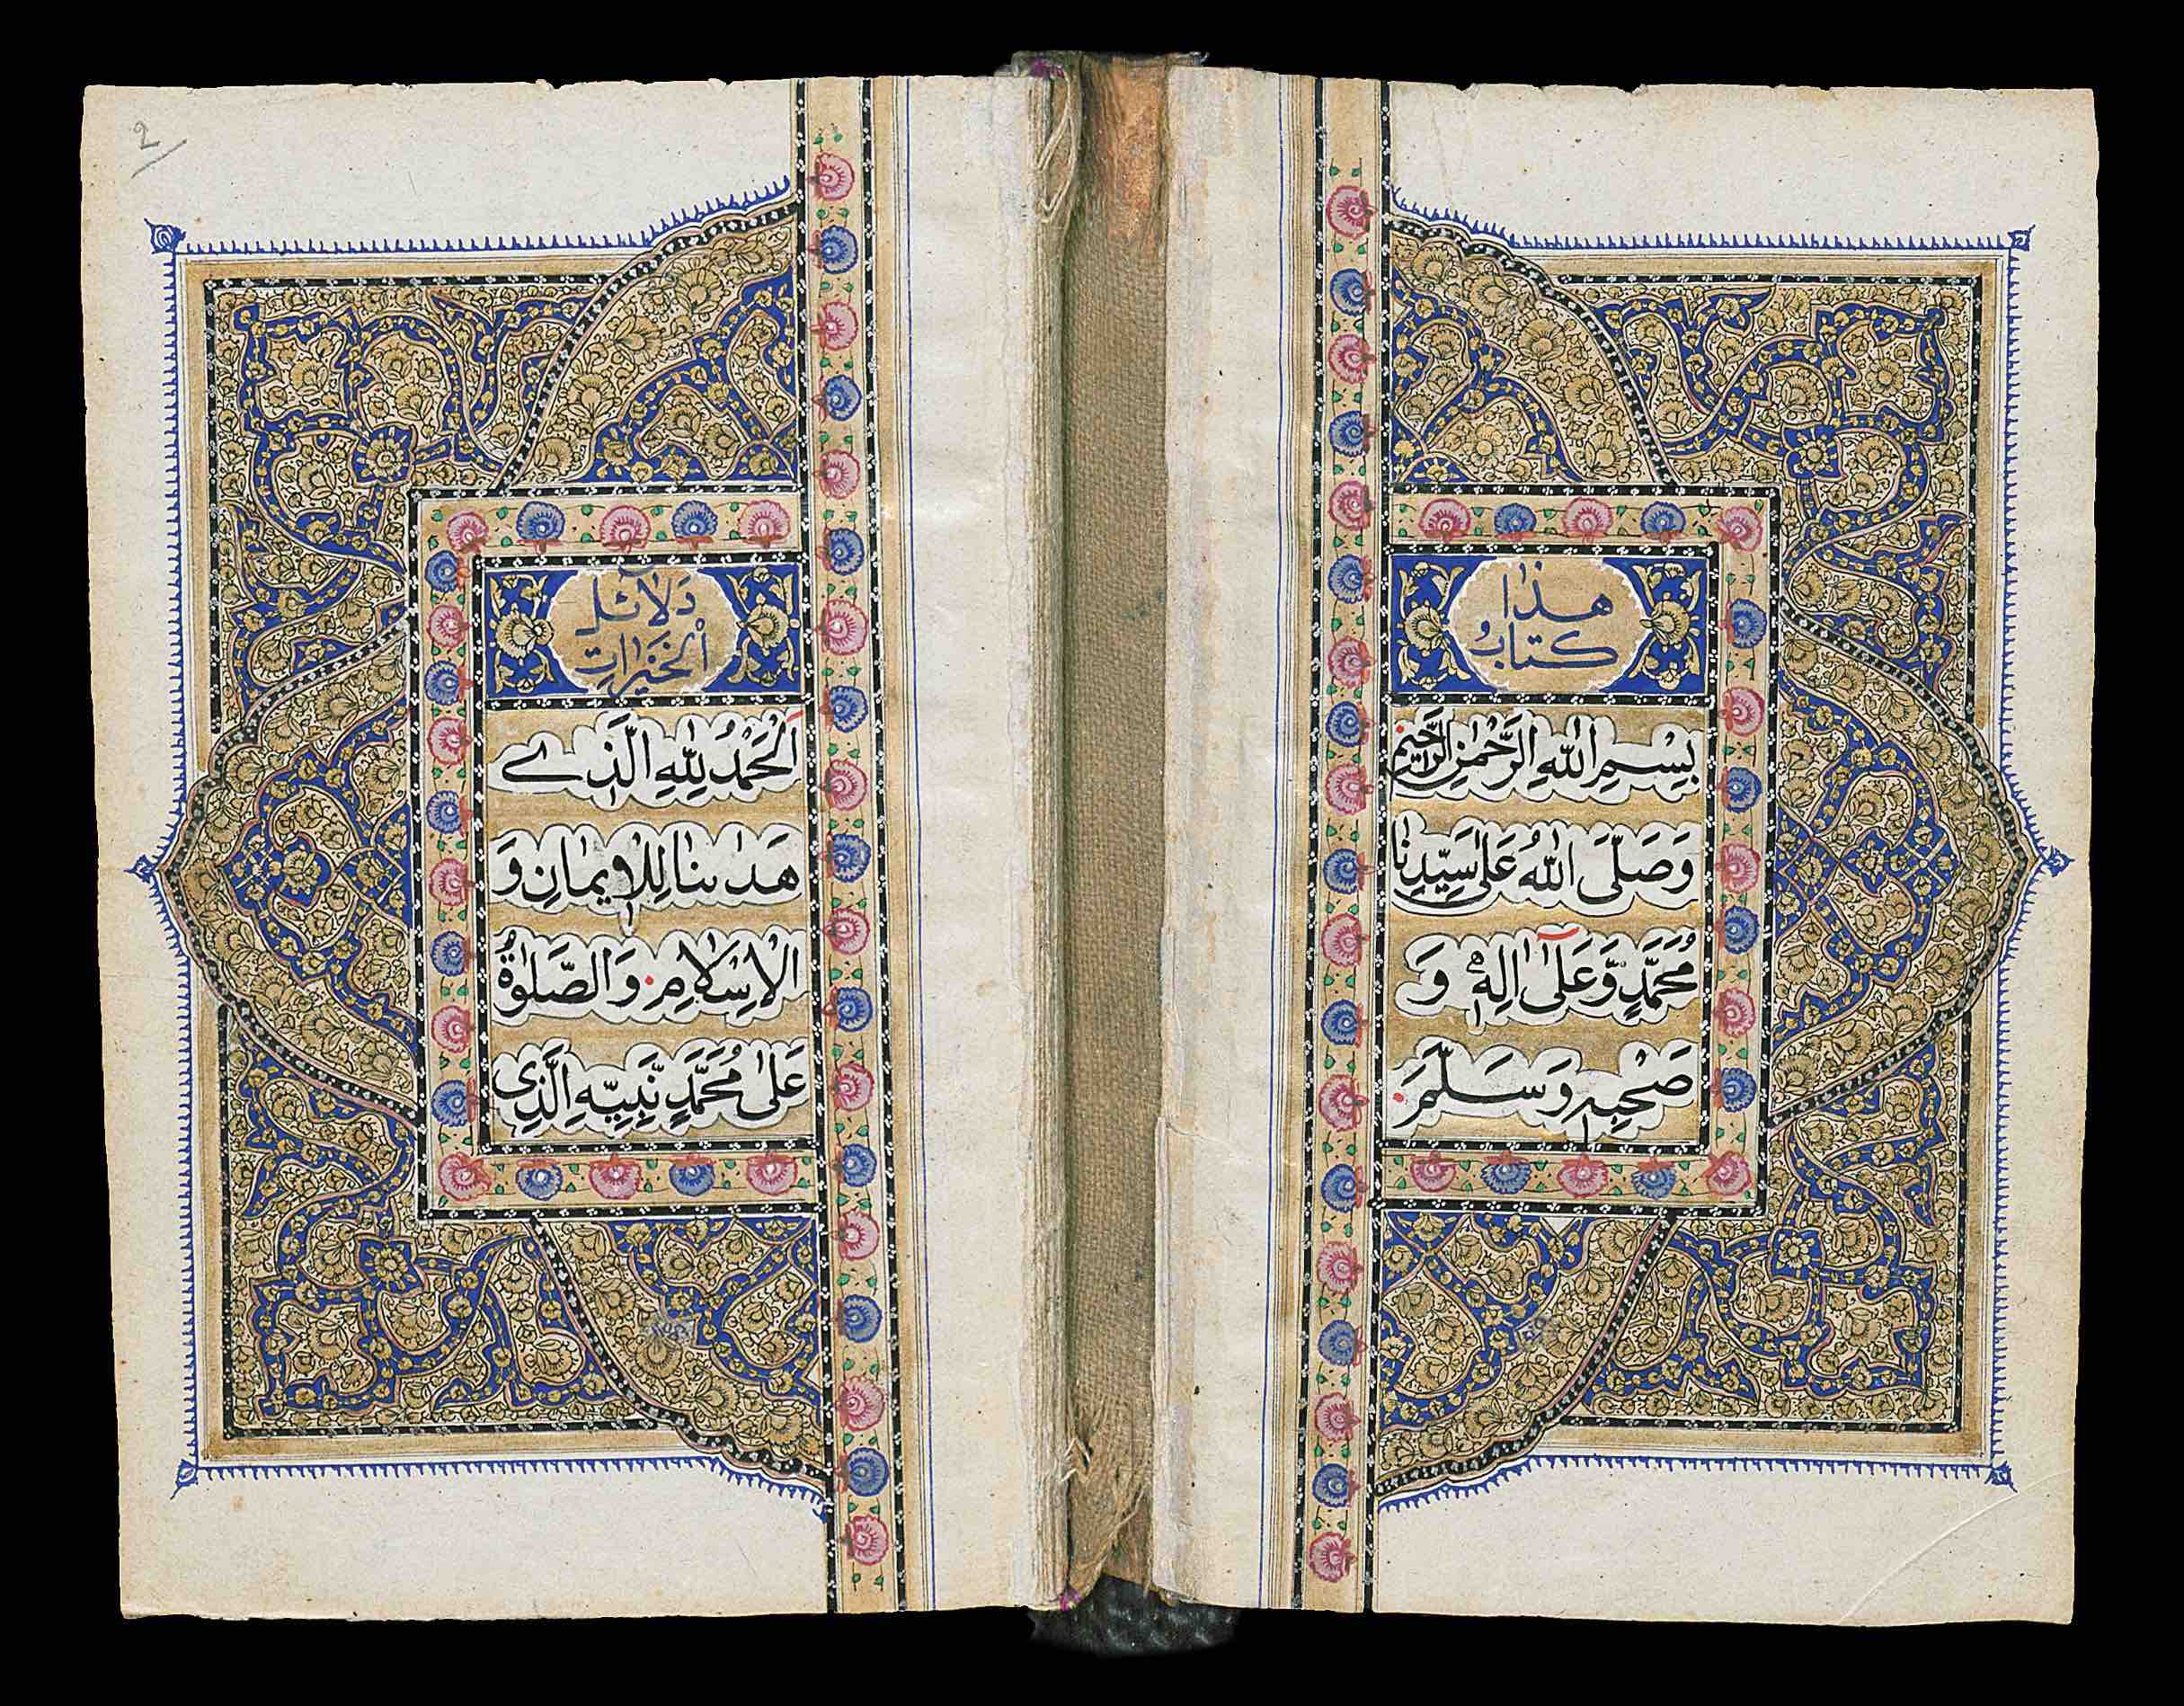 Yemeni manuscript in the Staatsbibliothek zu Berlin-Preussischer Kulturbesit collection, Berlin (<a href='https://w3id.org/vhmml/readingRoom/view/142496'>ZMT 800</a>)